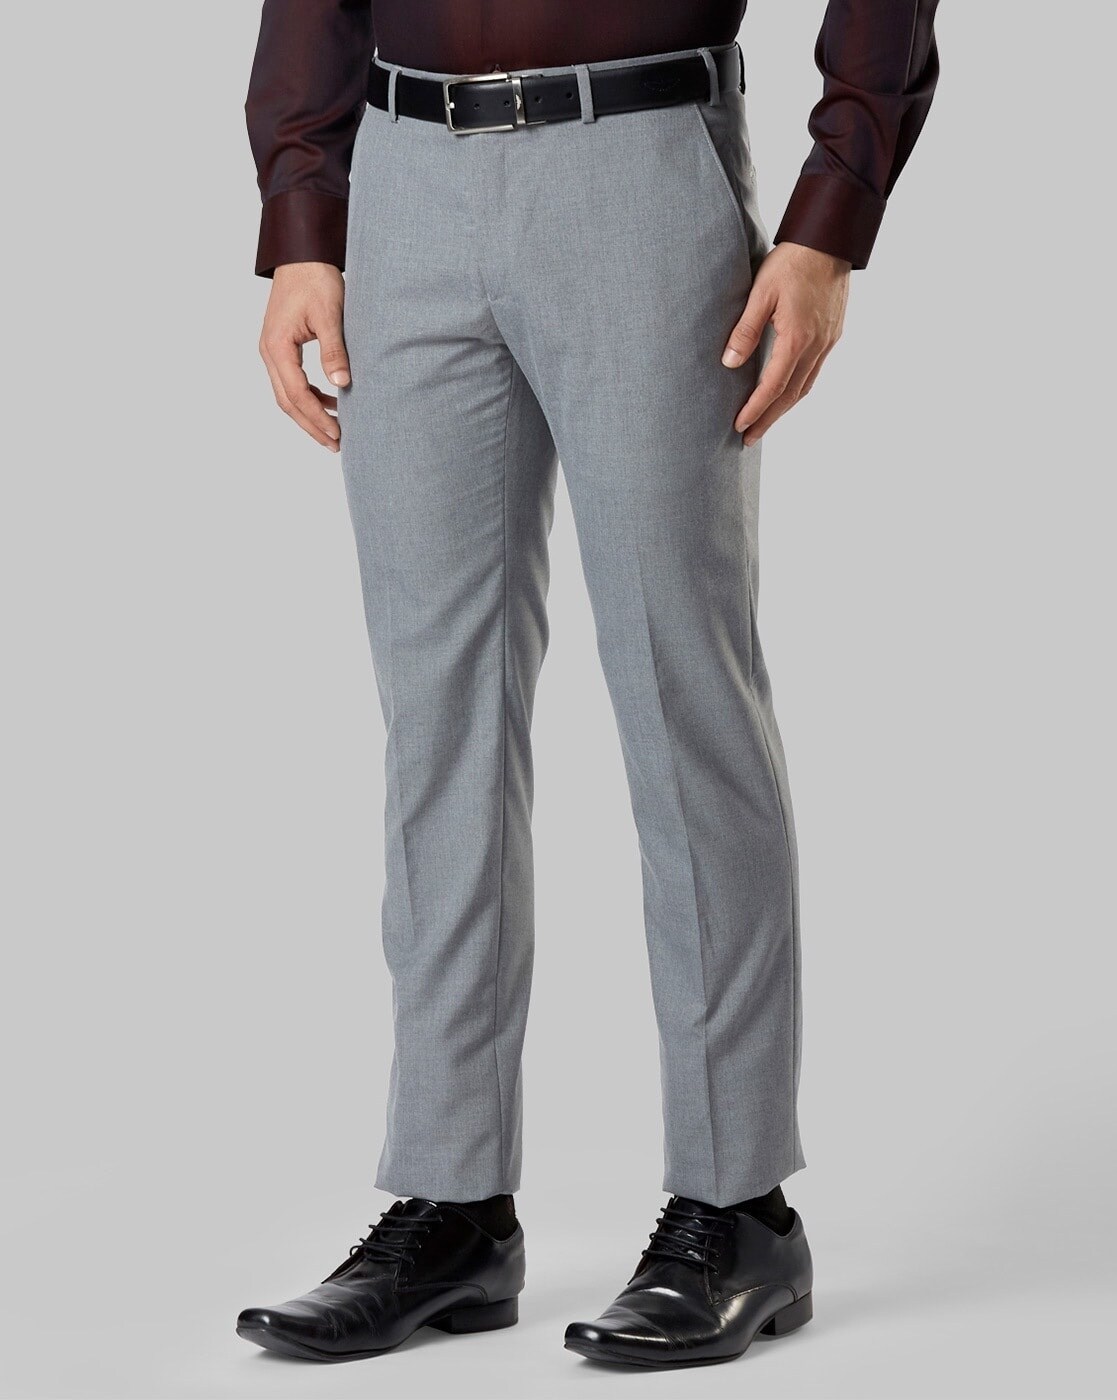 Buy Men Navy Solid Slim Fit Formal Trousers Online - 735603 | Peter England